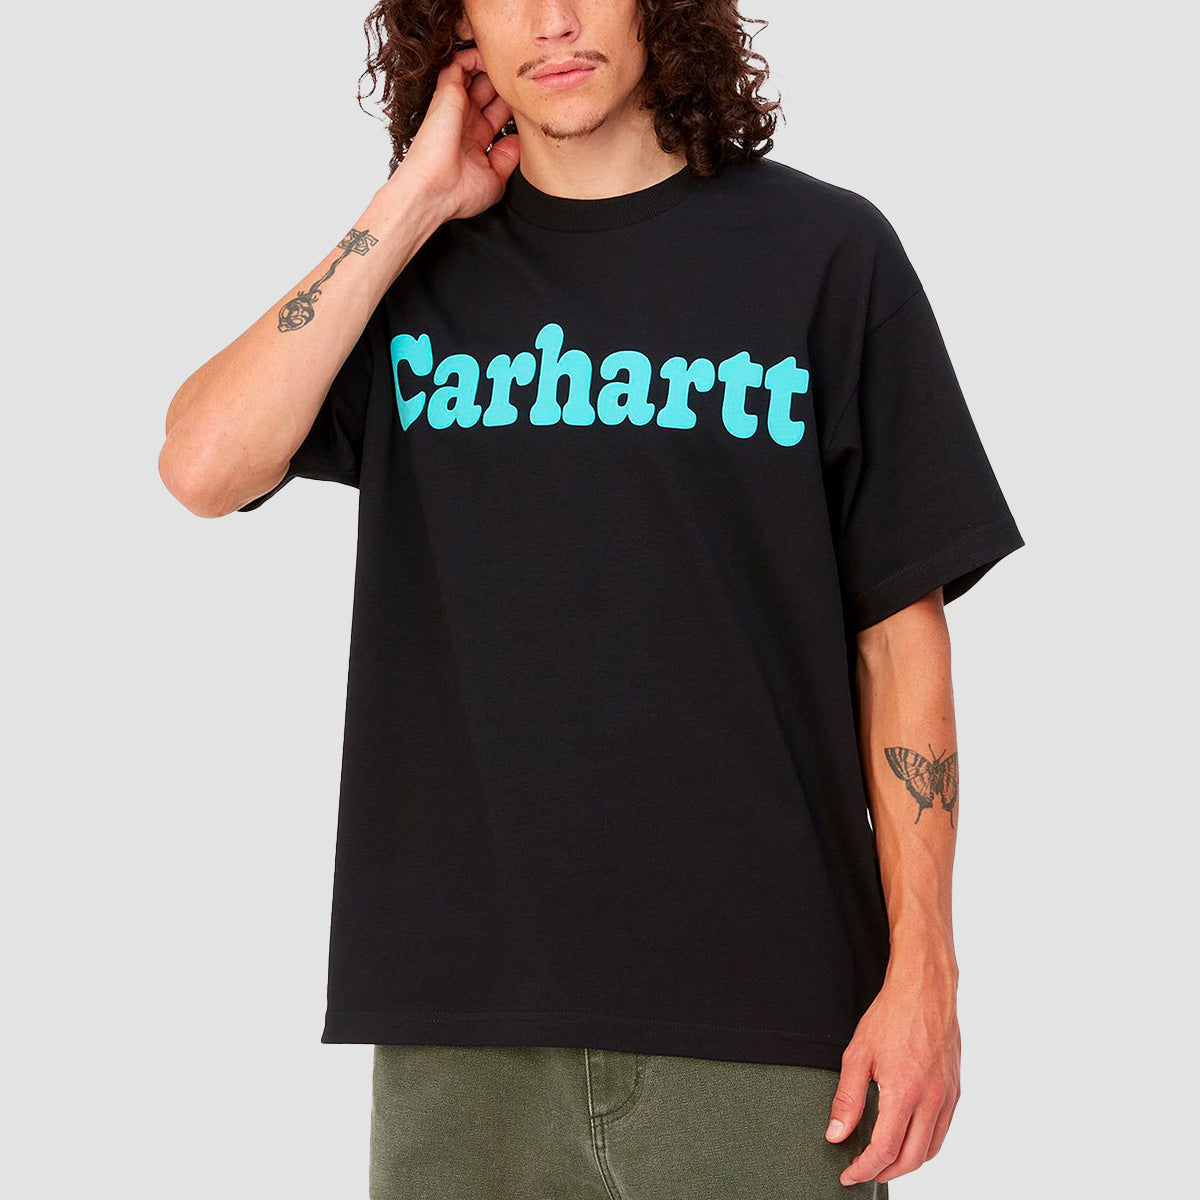 Carhartt WIP Bubbles T-Shirt Black/Turquoise